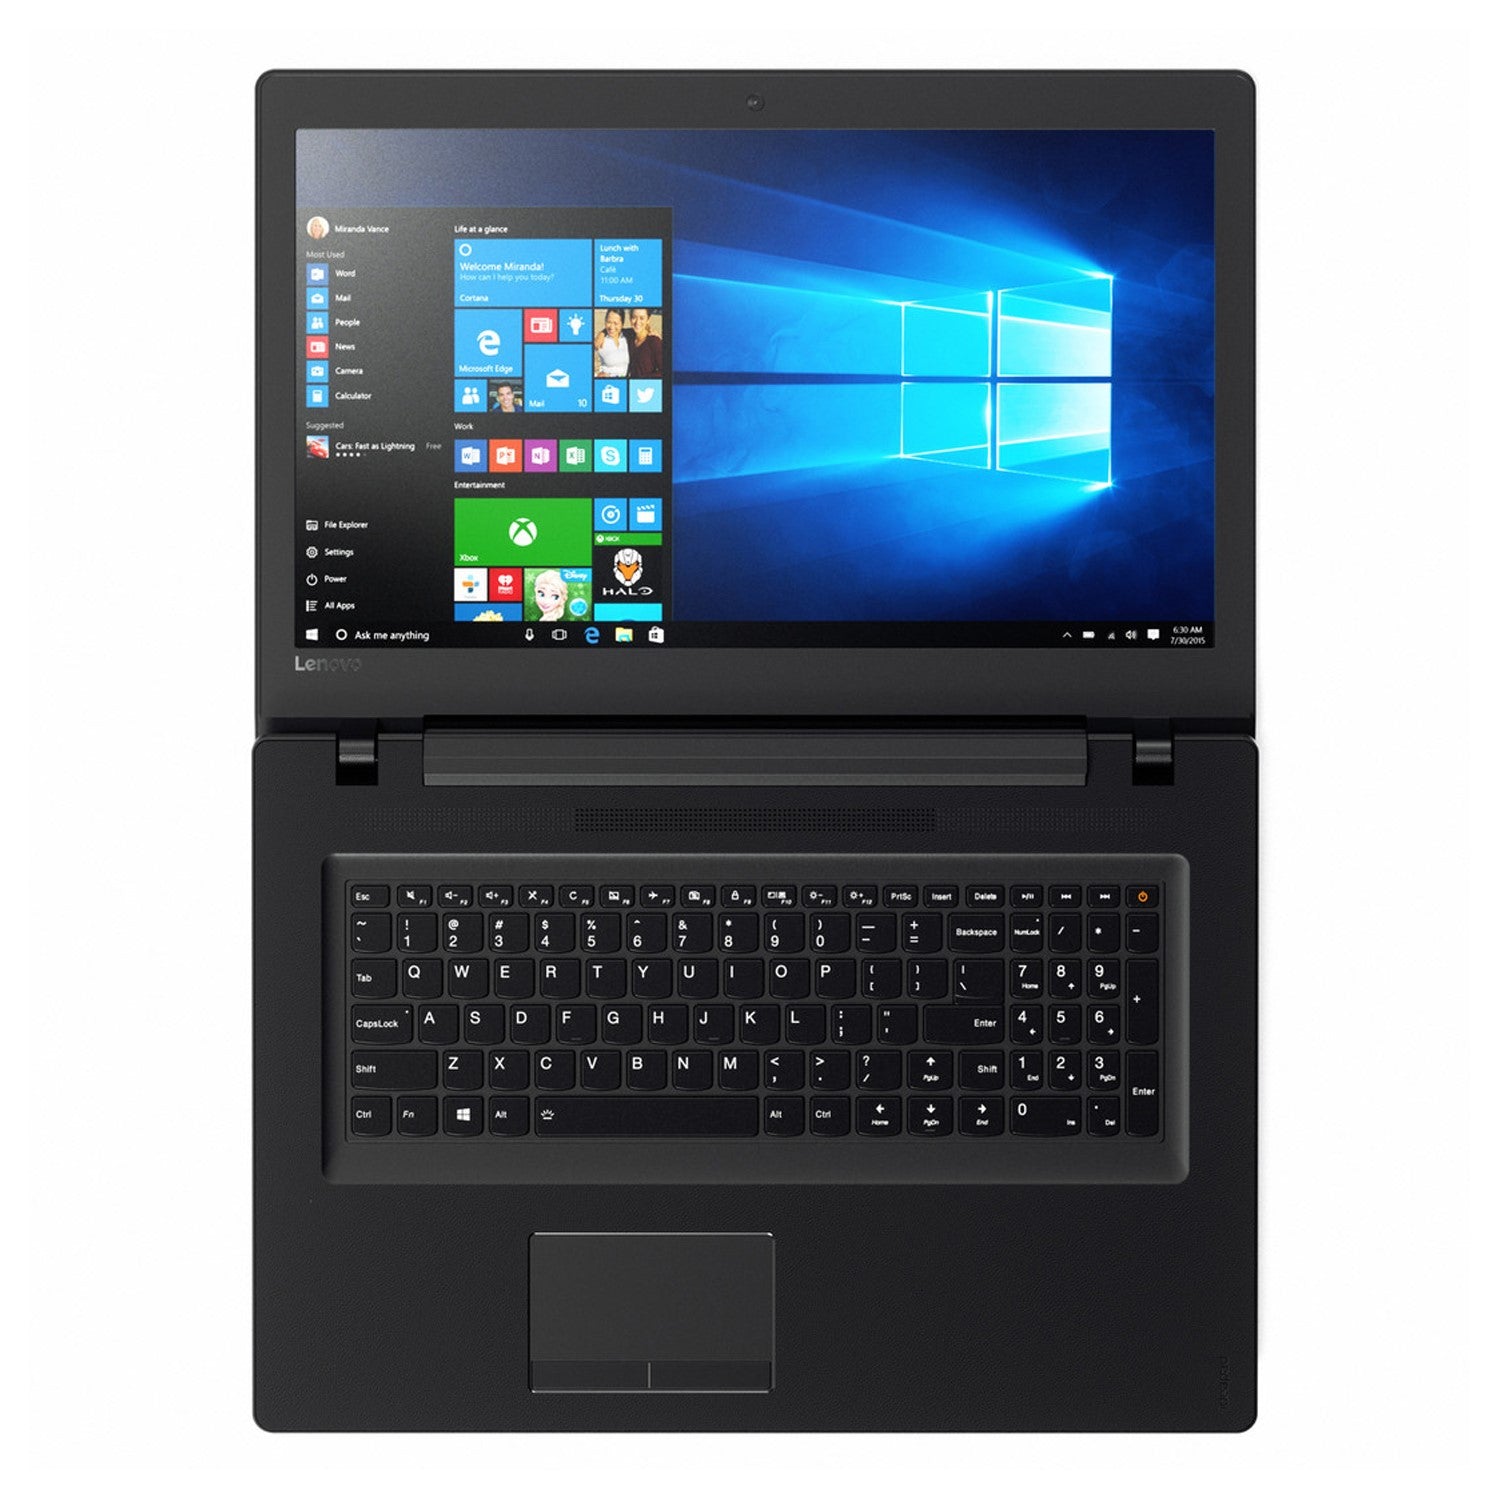 Lenovo V110-15IKB 80TH0012UK Laptop Intel Core i5-7200U 4GB RAM 500GB HDD 15.6" - Black